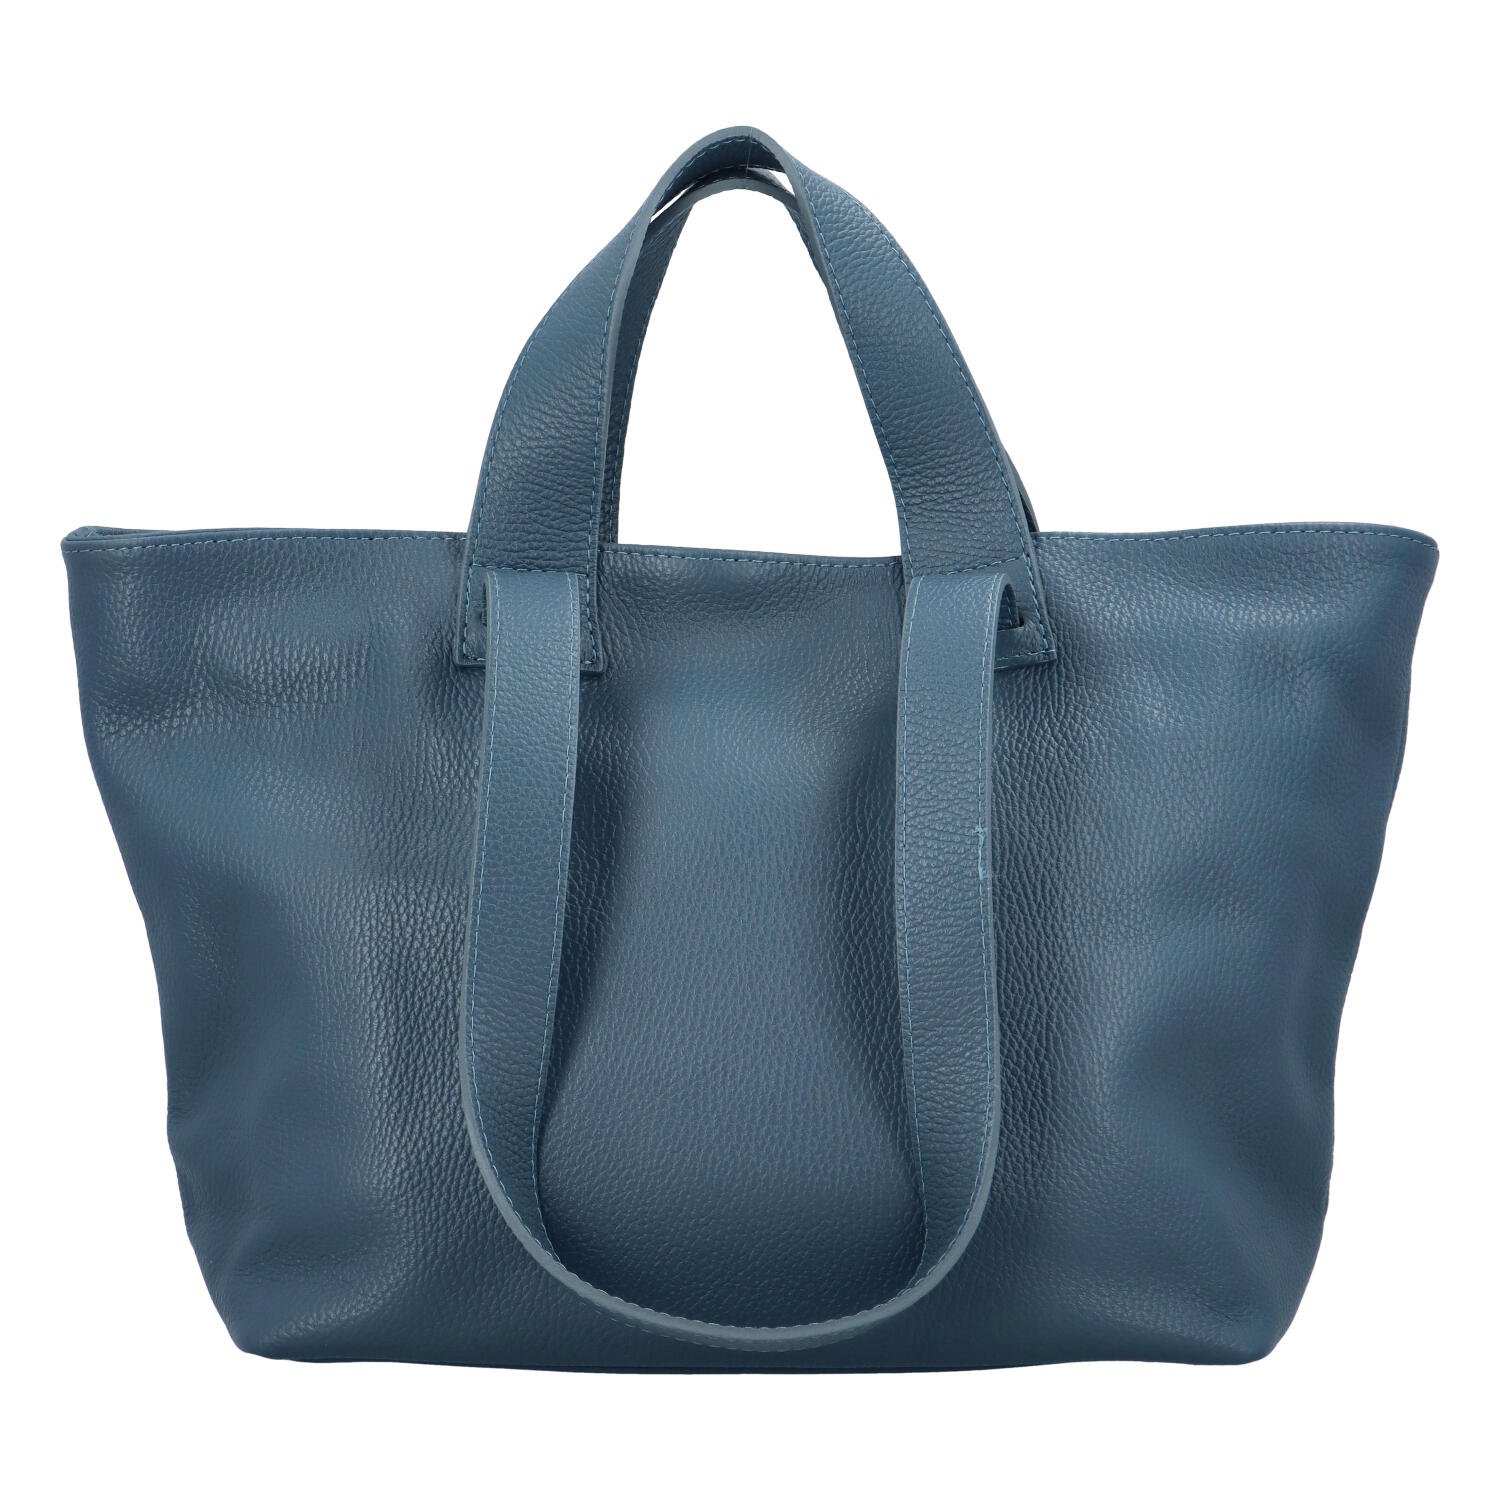 Dámska kožená kabelka bledo modrá - ItalY Nicola modrá